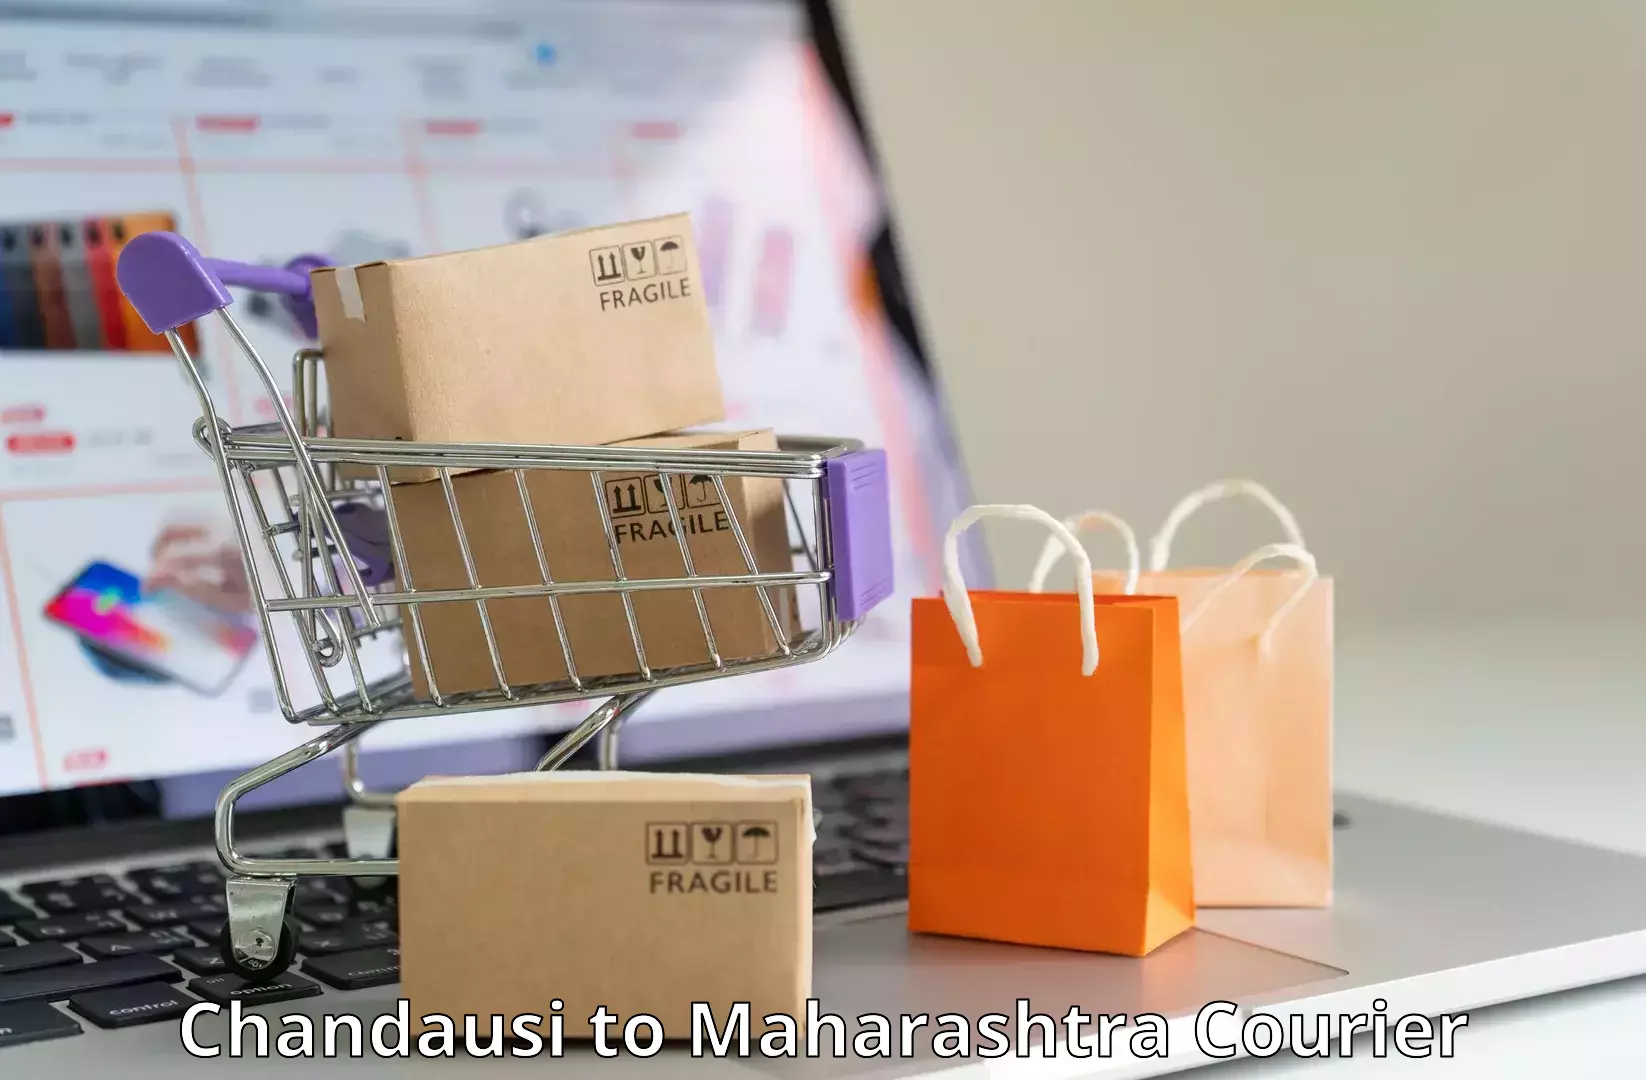 Courier service comparison Chandausi to Maharashtra